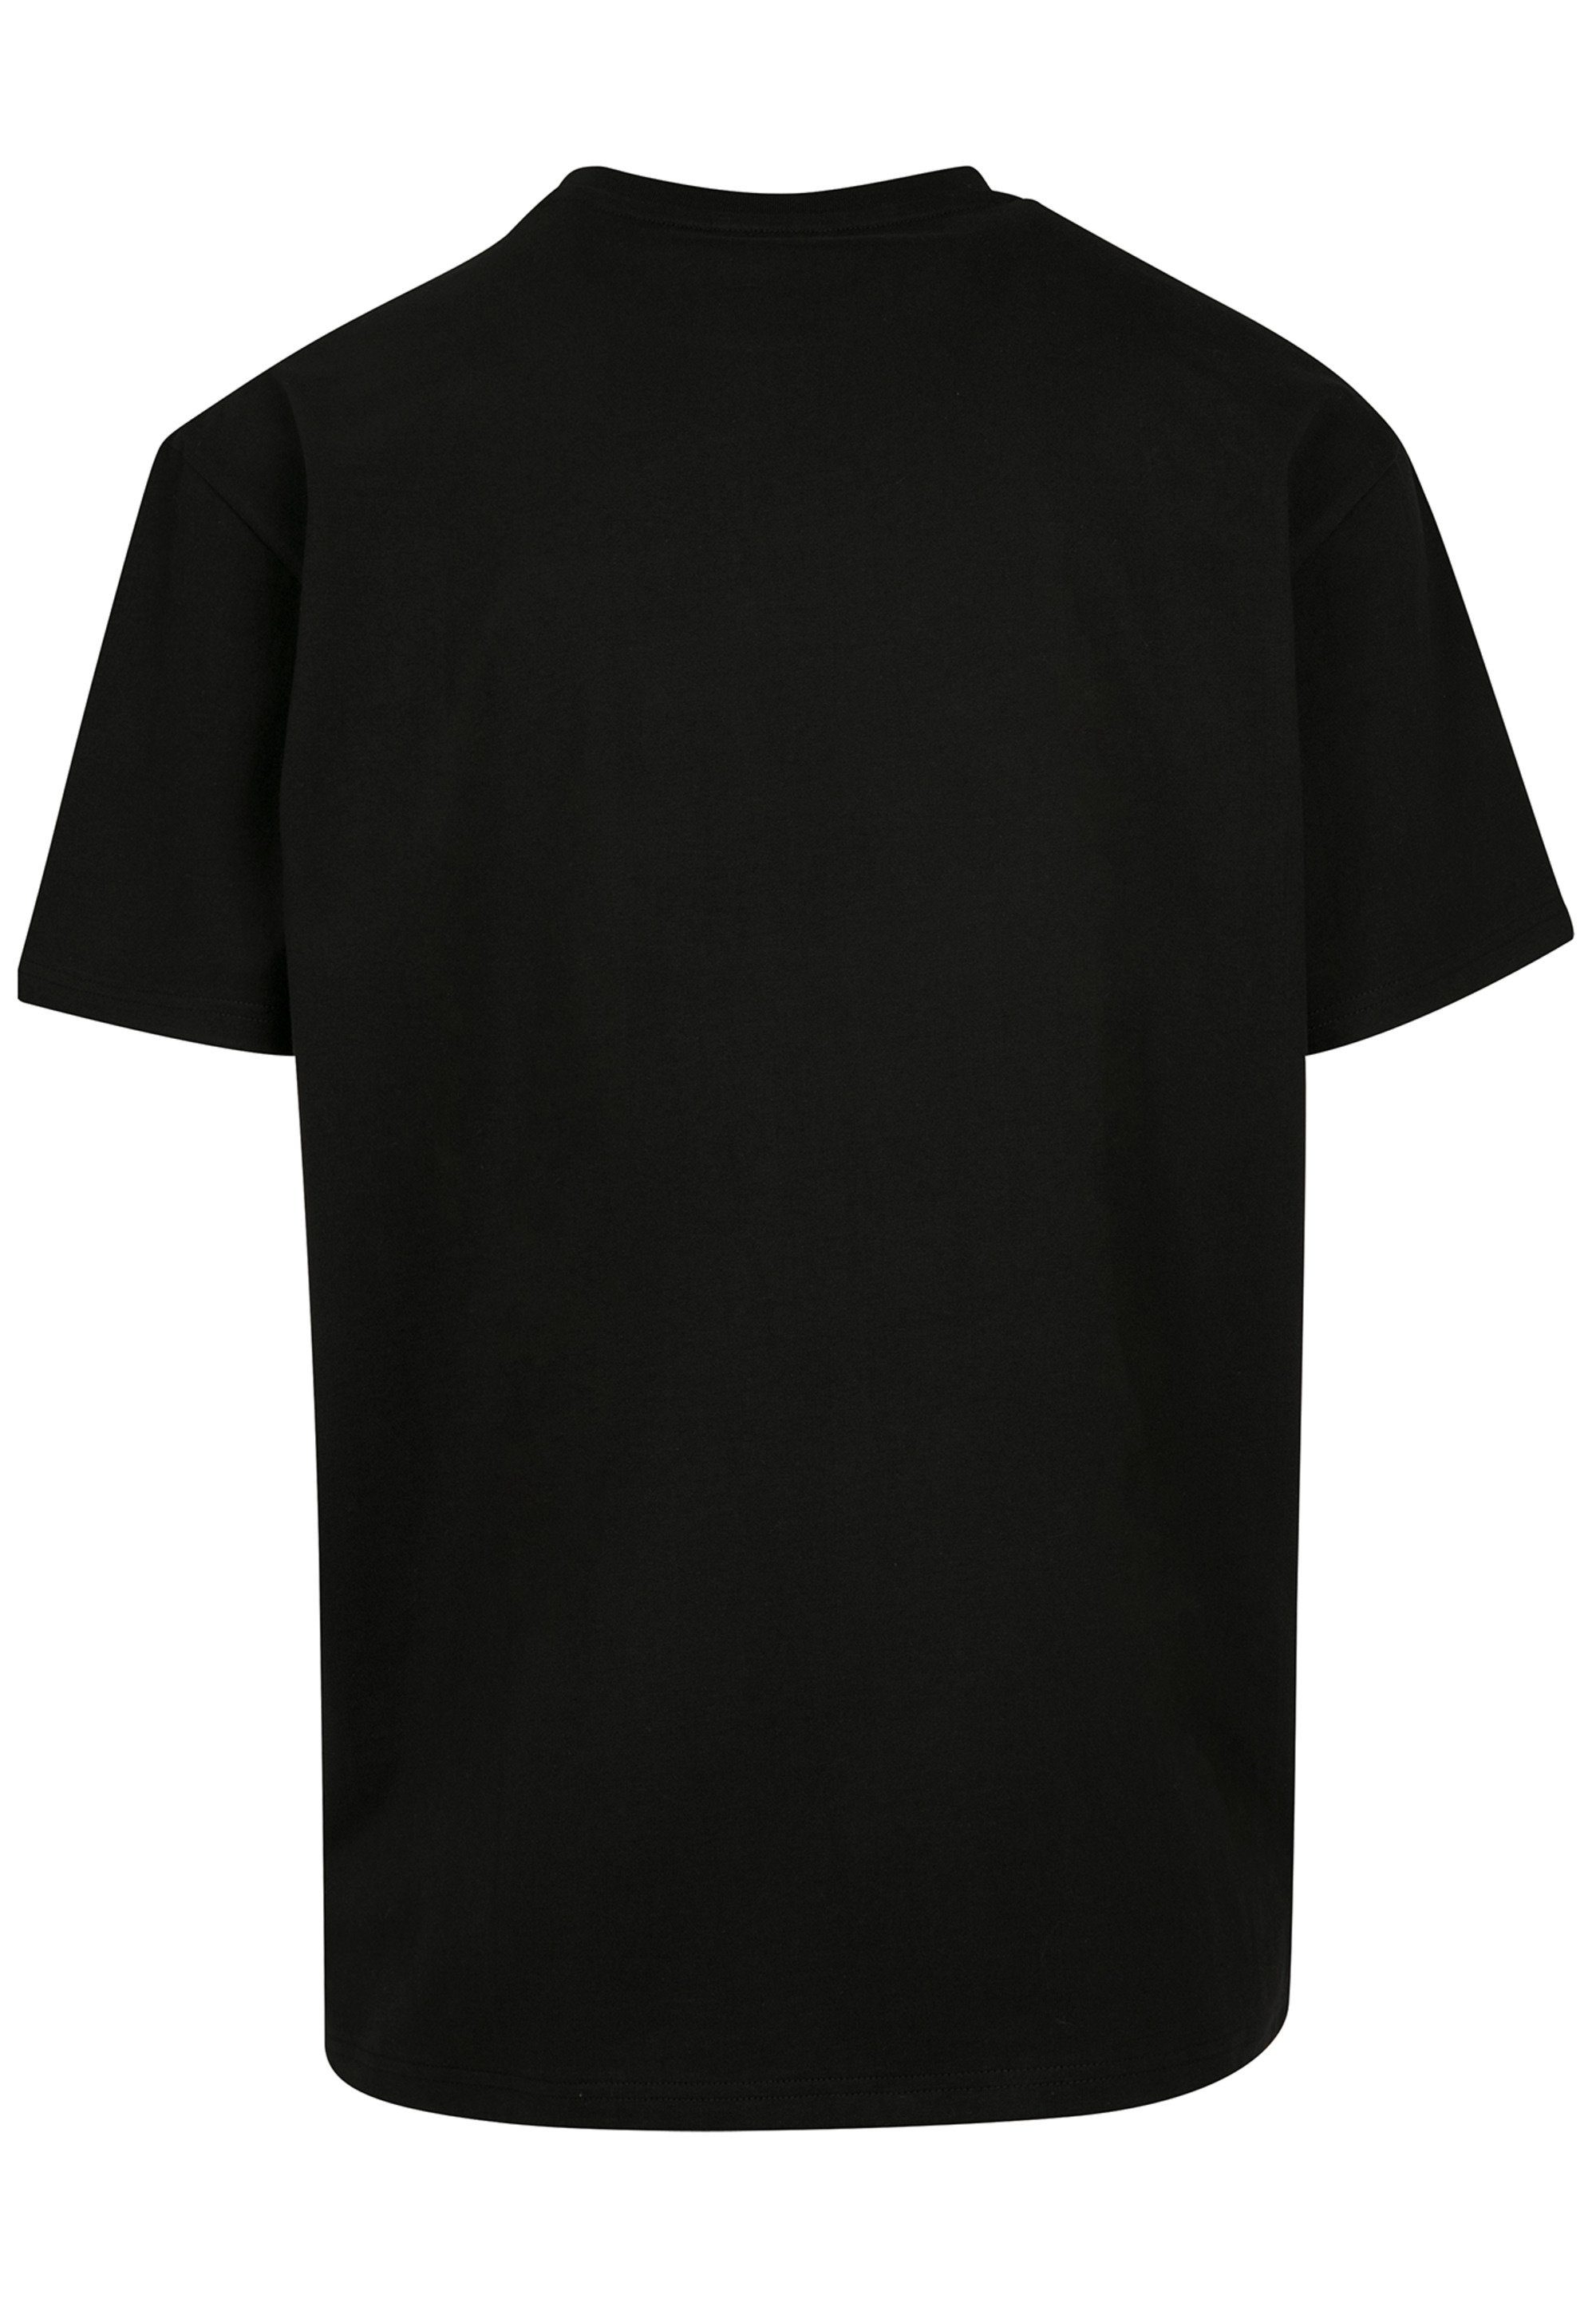 Karten schwarz All Poker F4NT4STIC Print T-Shirt In